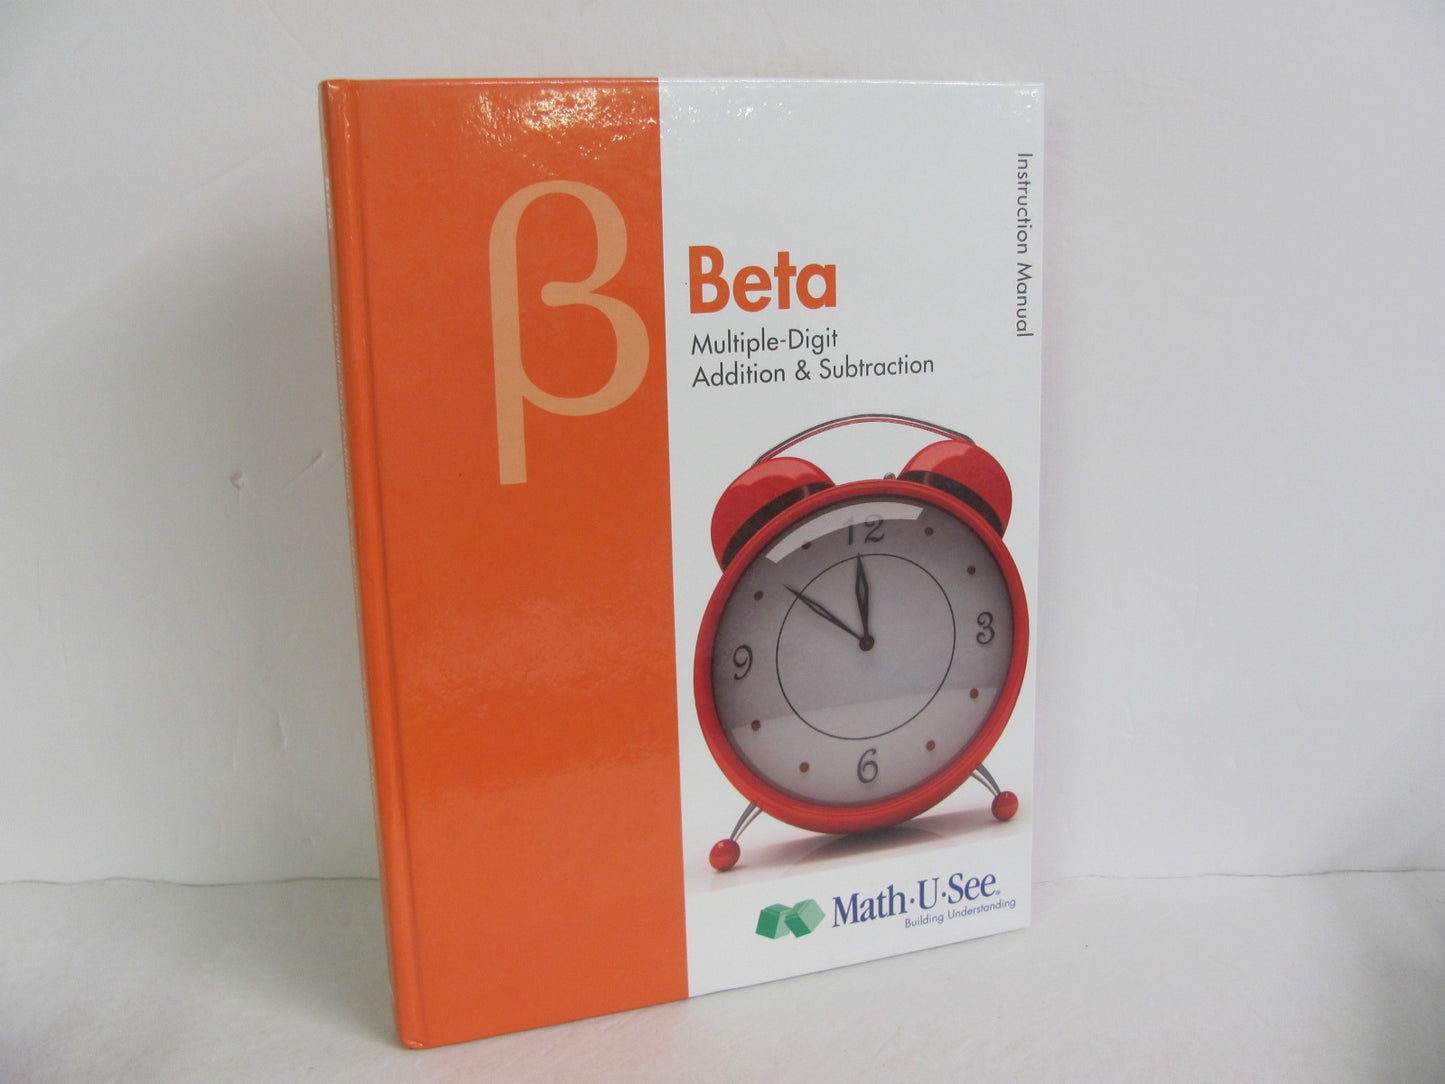 Beta Math U See Instruction Manual  Pre-Owned Demme Mathematics Textbooks